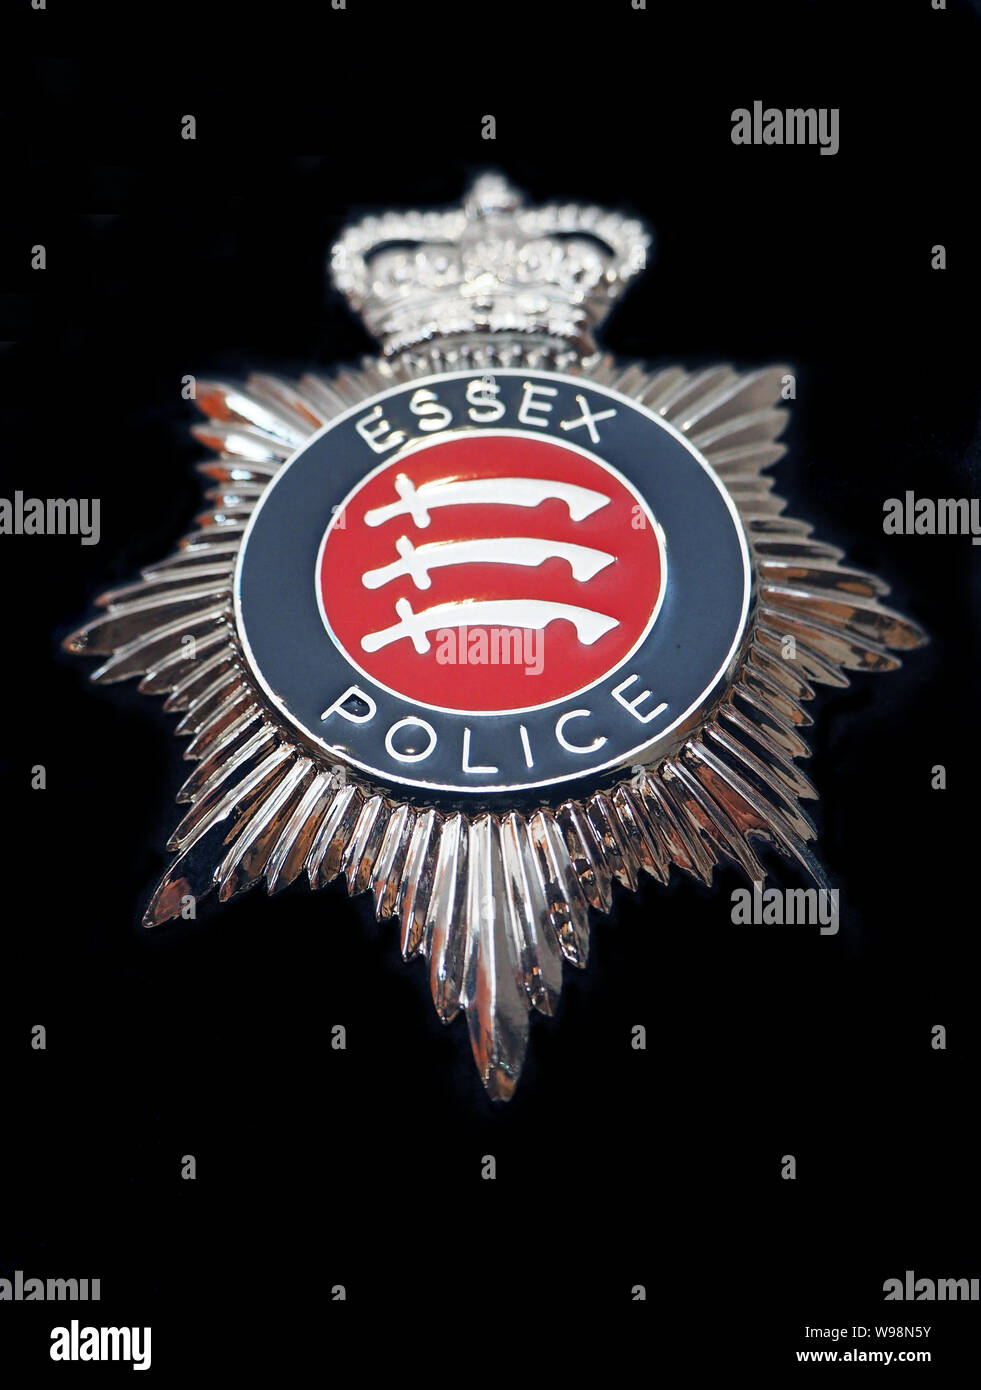 Helmet badge of Essex Police, UK Stock Photo